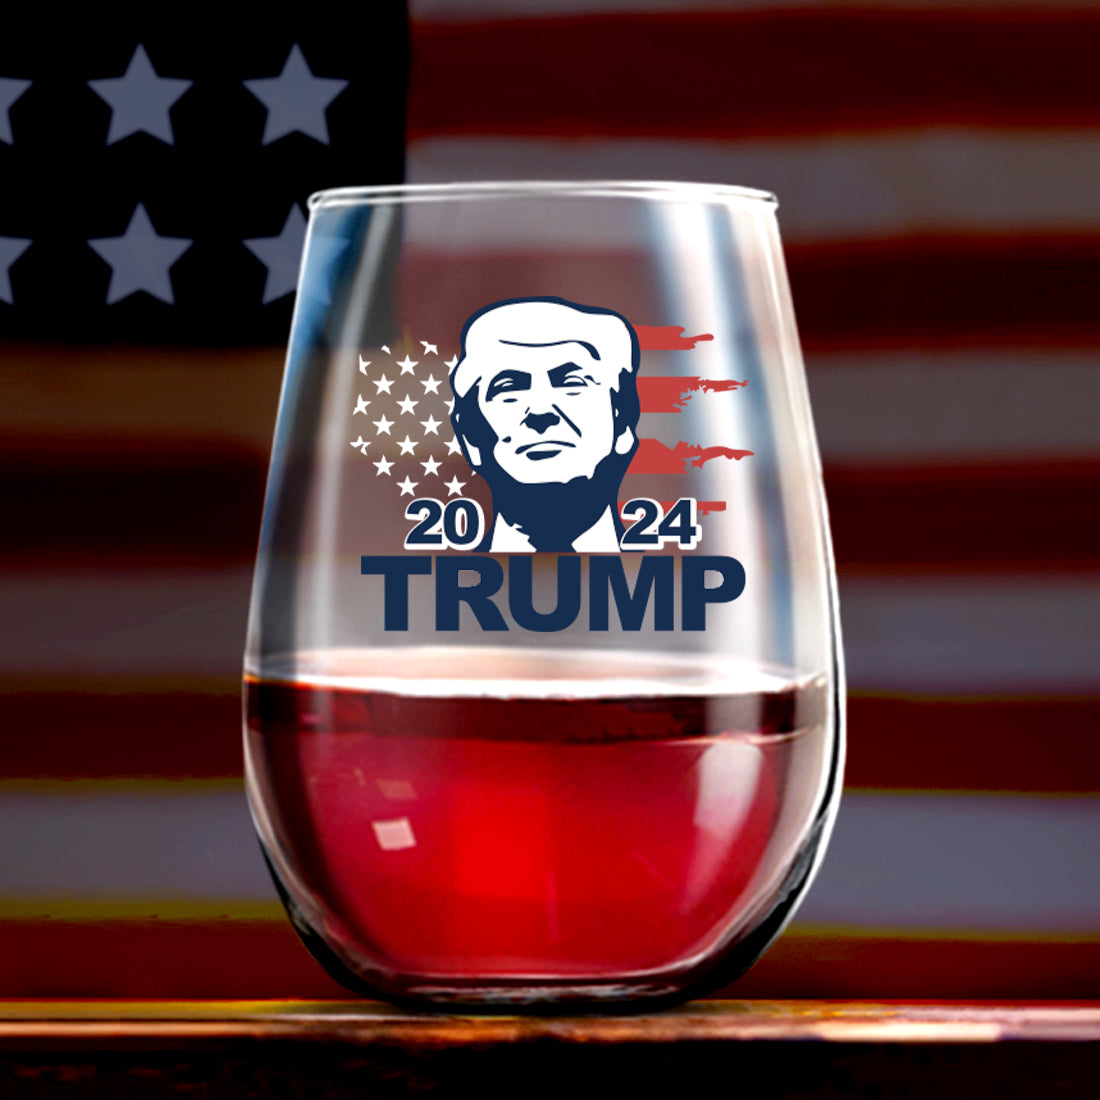 Trump 2024 Portrait - Color Wine Glass - Durable Printed Artwork